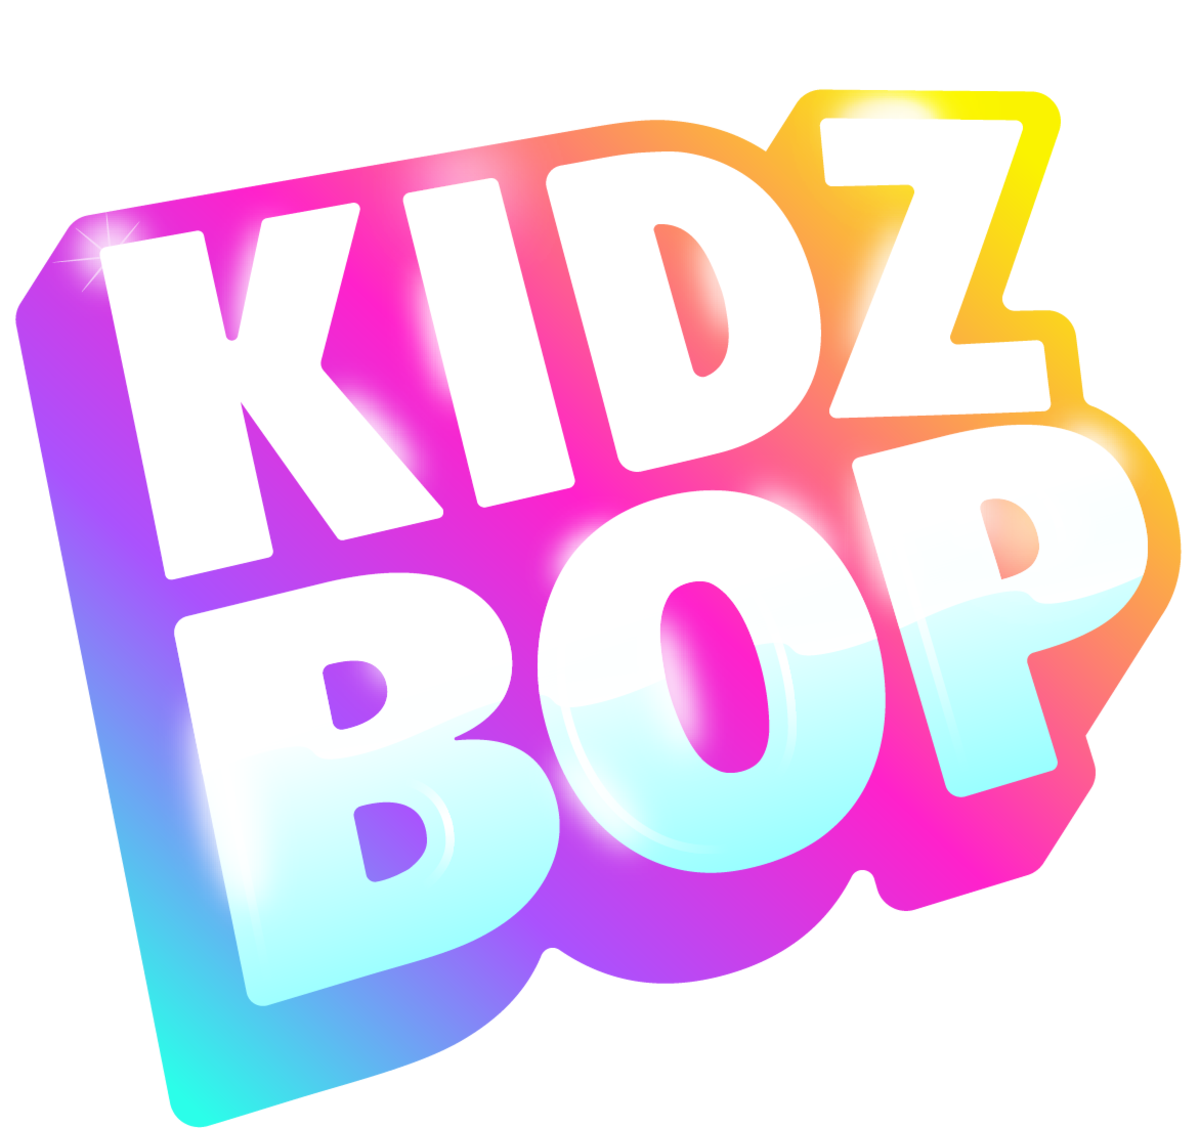 Kidz Bop Kids - Karaoke Channel: Sing Like Ricky Martin [In the Style of Ricky Martin]